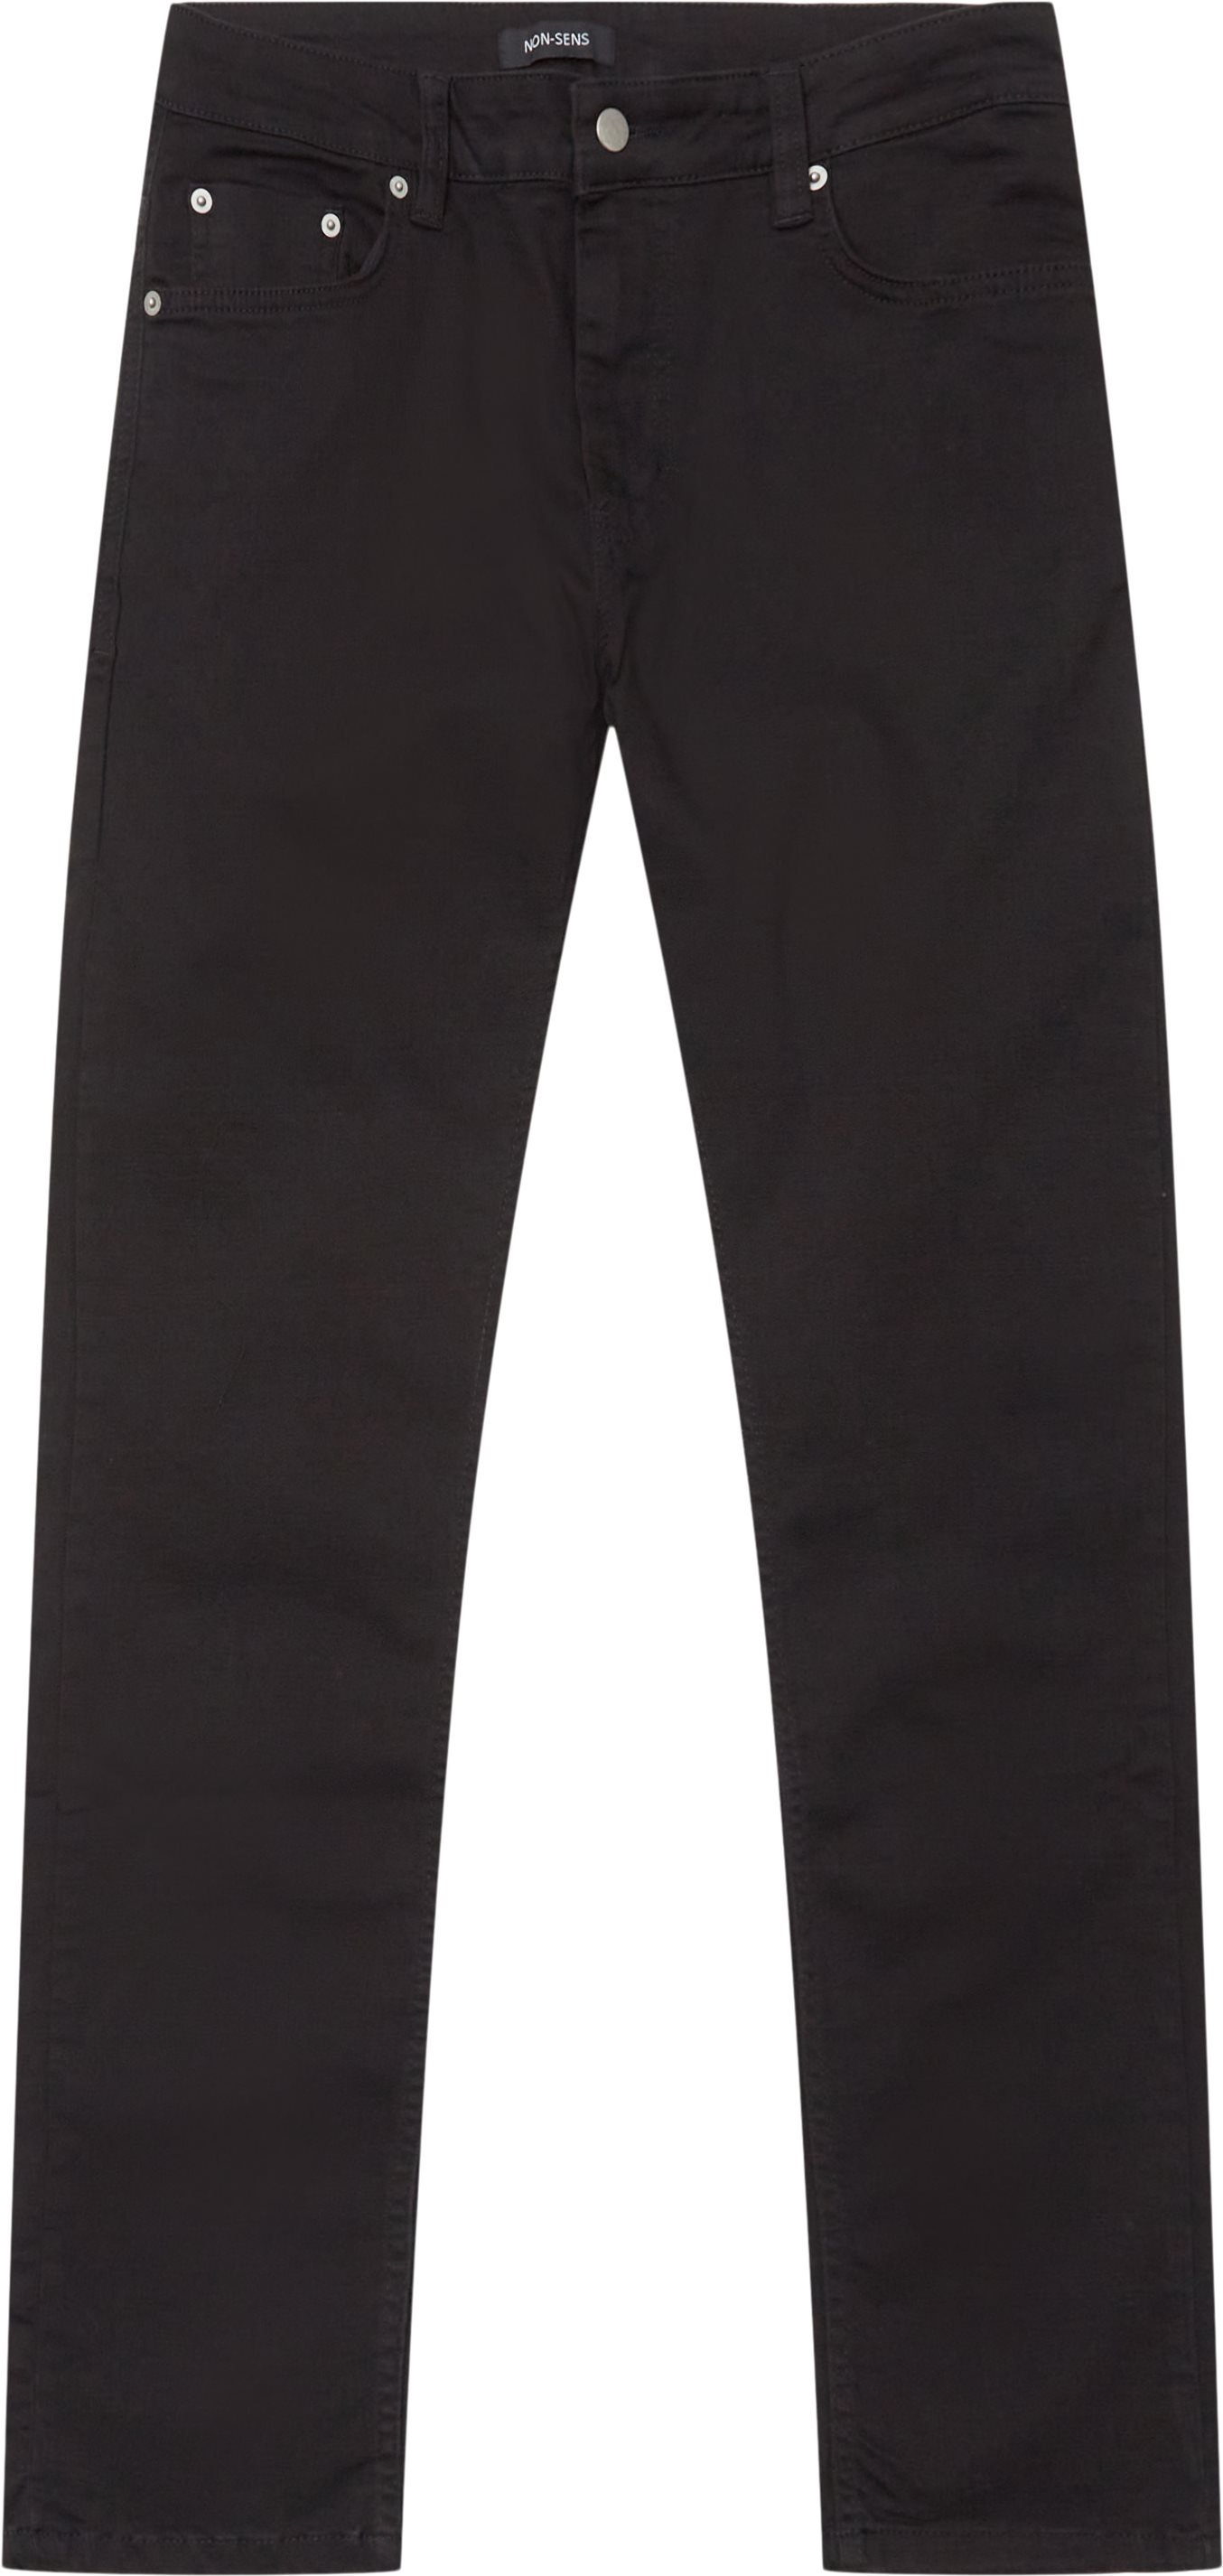 Jackson Jeans - Jeans - Slim fit - Black